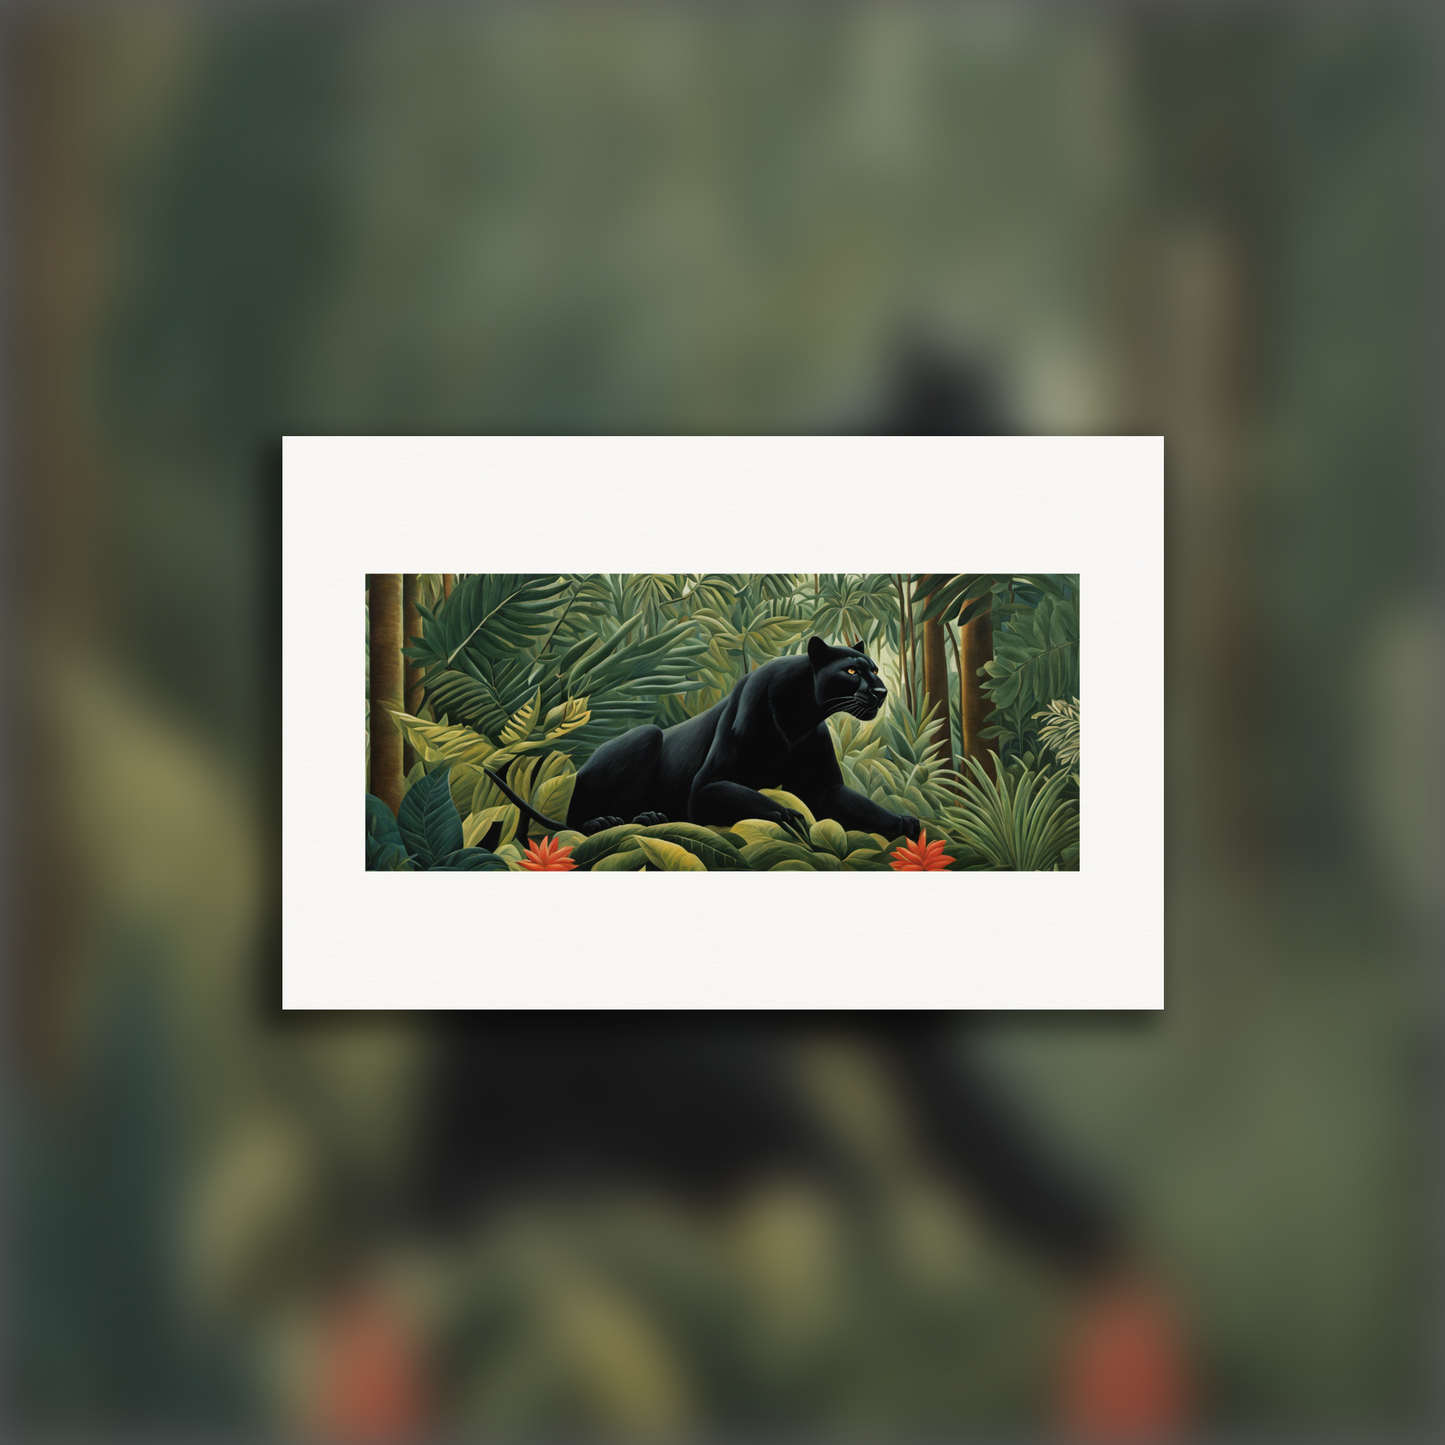 Poster - Henri Rousseau, a fierce black panther in the jungle, close-up - 2977319408